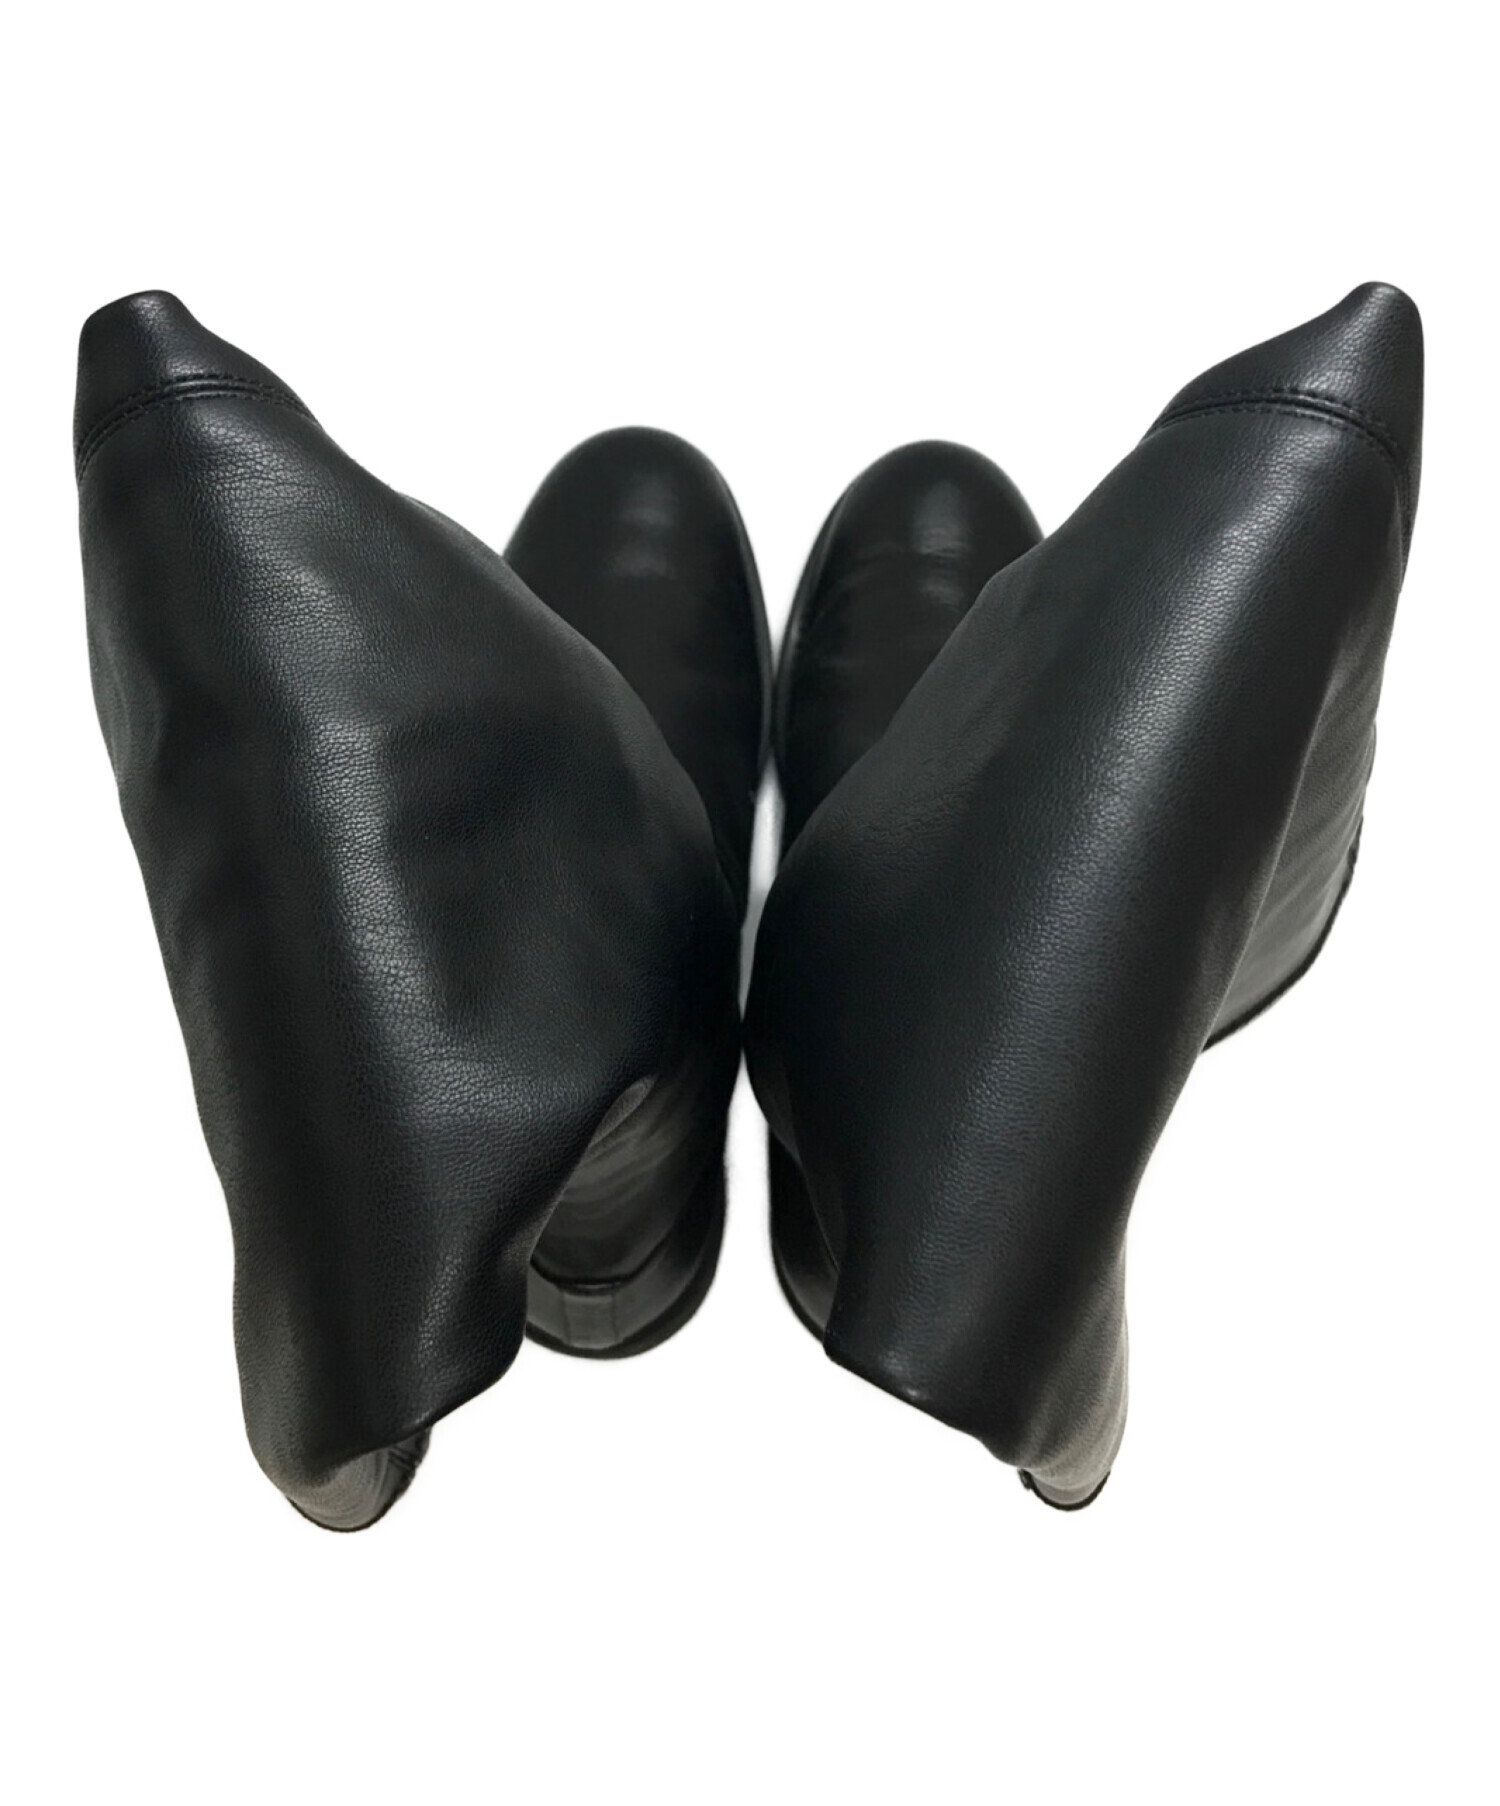 GALERIE VIE (ギャルリーヴィー) ニーハイストレッチブーツ ブラック サイズ:SIZE 36